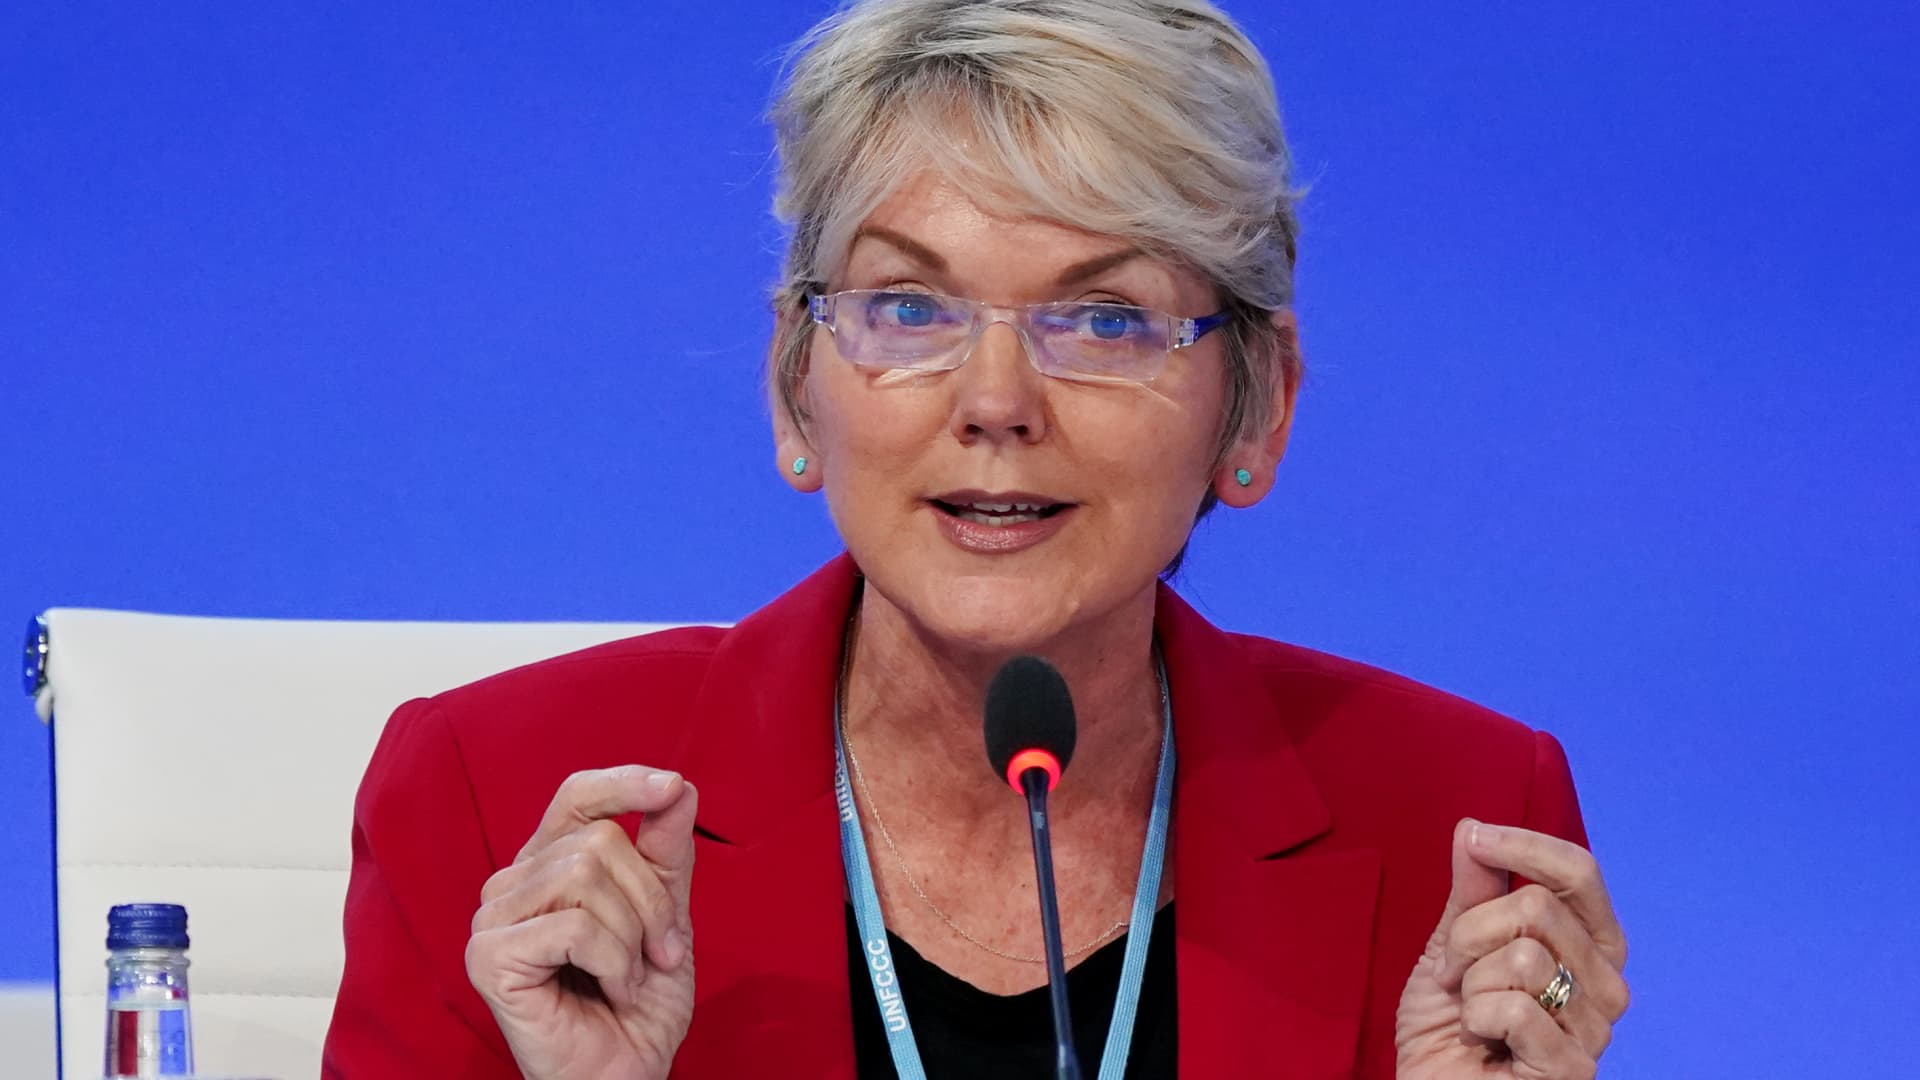 U.S. Secretary of Energy Jennifer Granholm speaks to delegates at COP26 in Glasgow, Scotland.